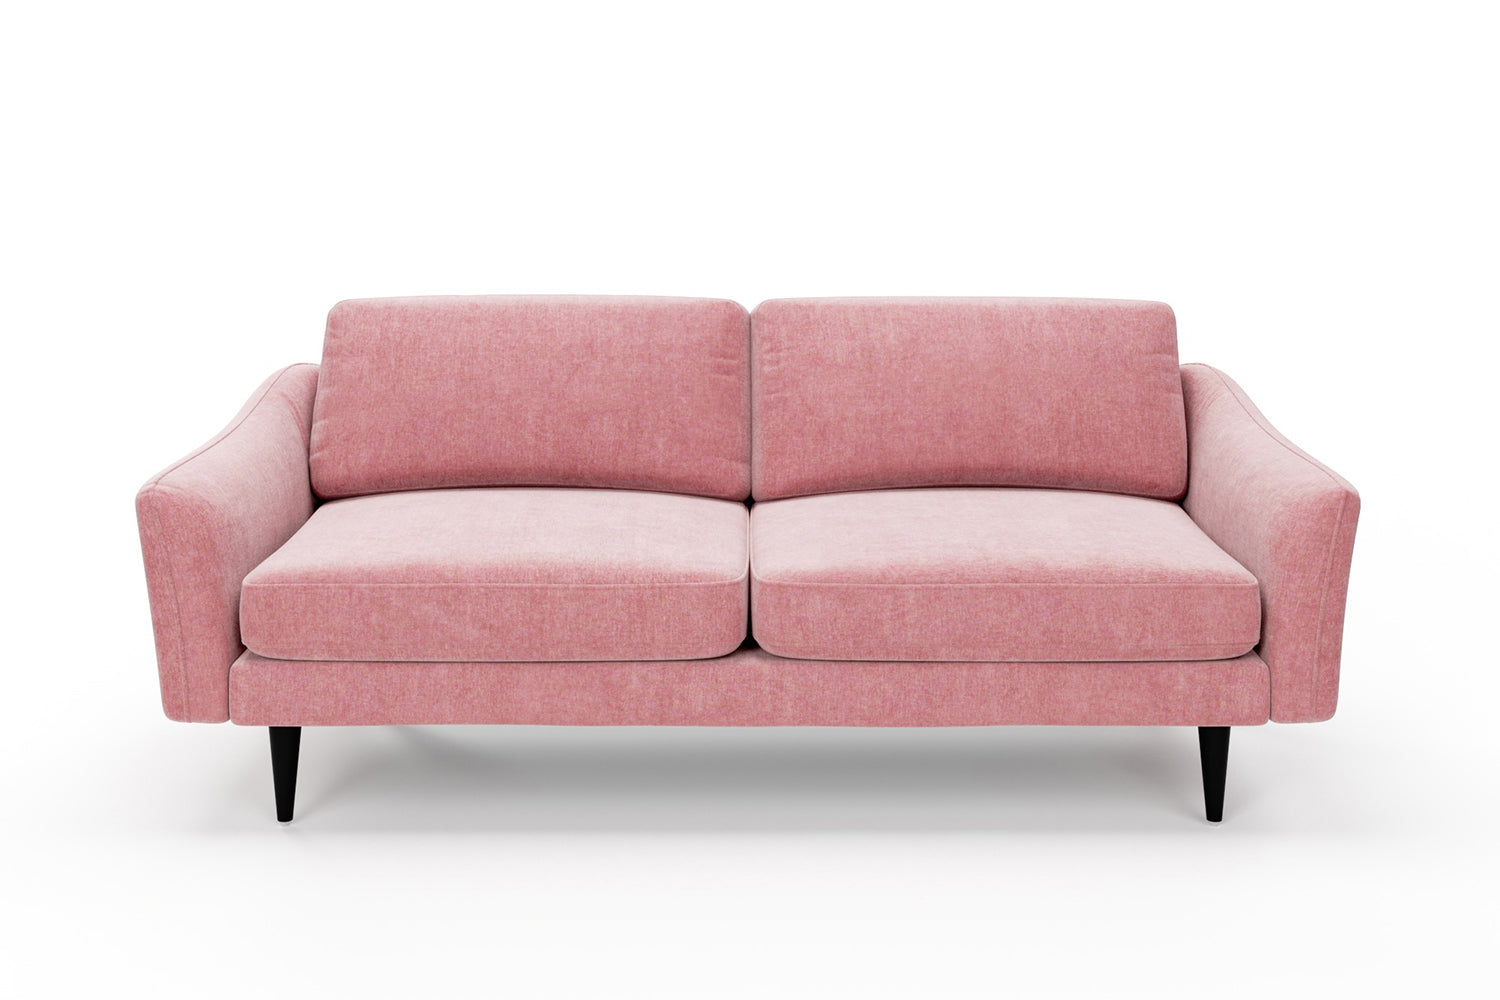 SNUG | The Rebel 3 Seater Sofa in Blush Coral variant_40621890732080